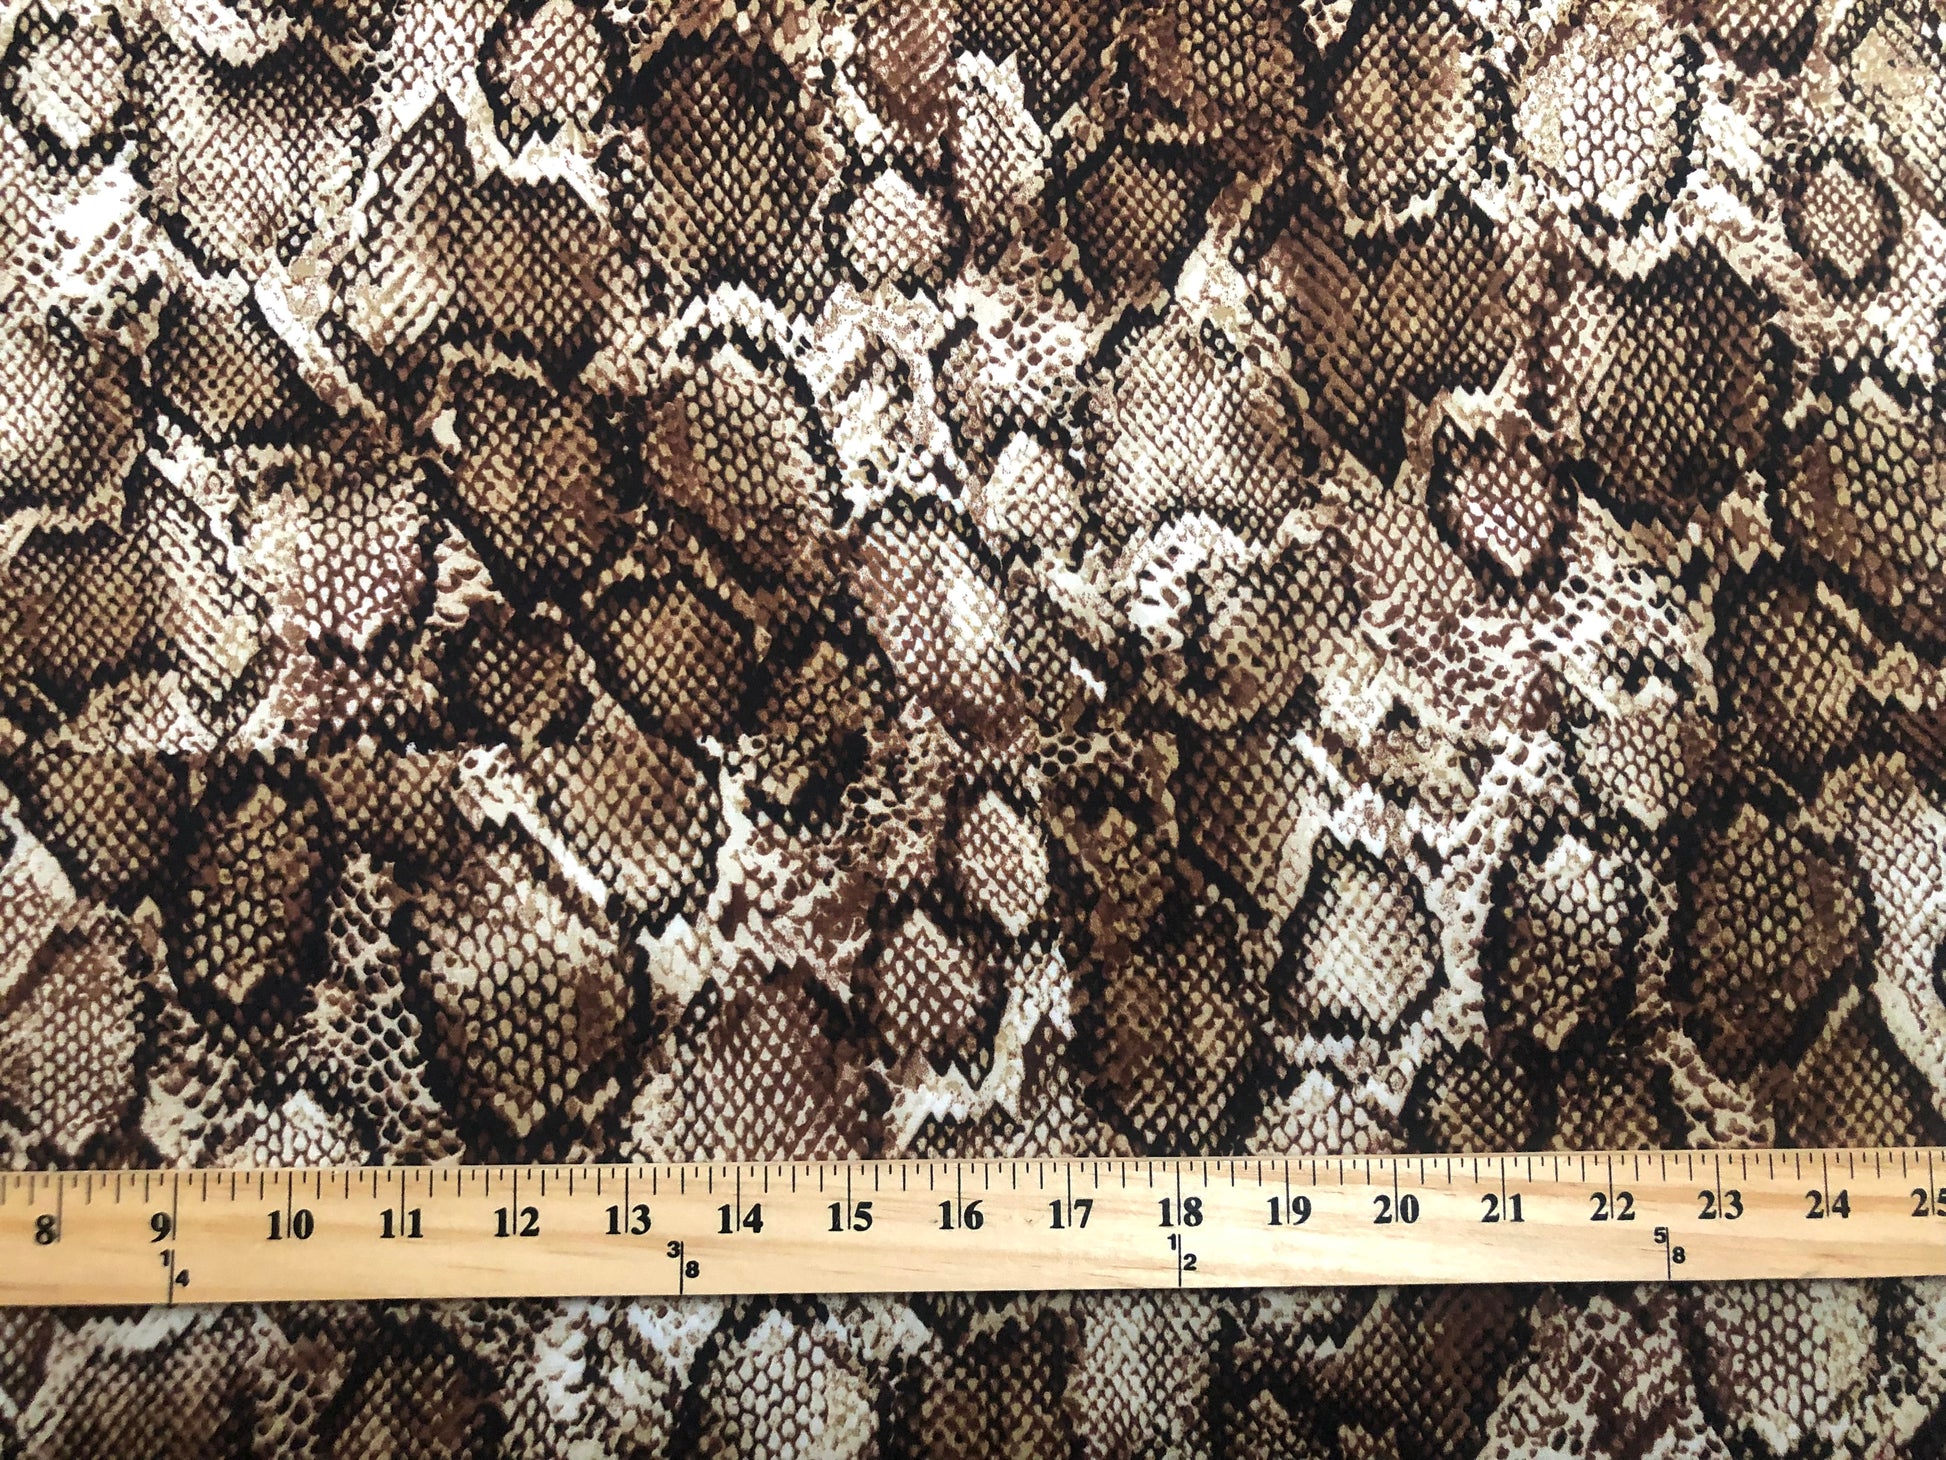 GREY Snake Skin Fabric Snakeskin Animal Print Cotton Material